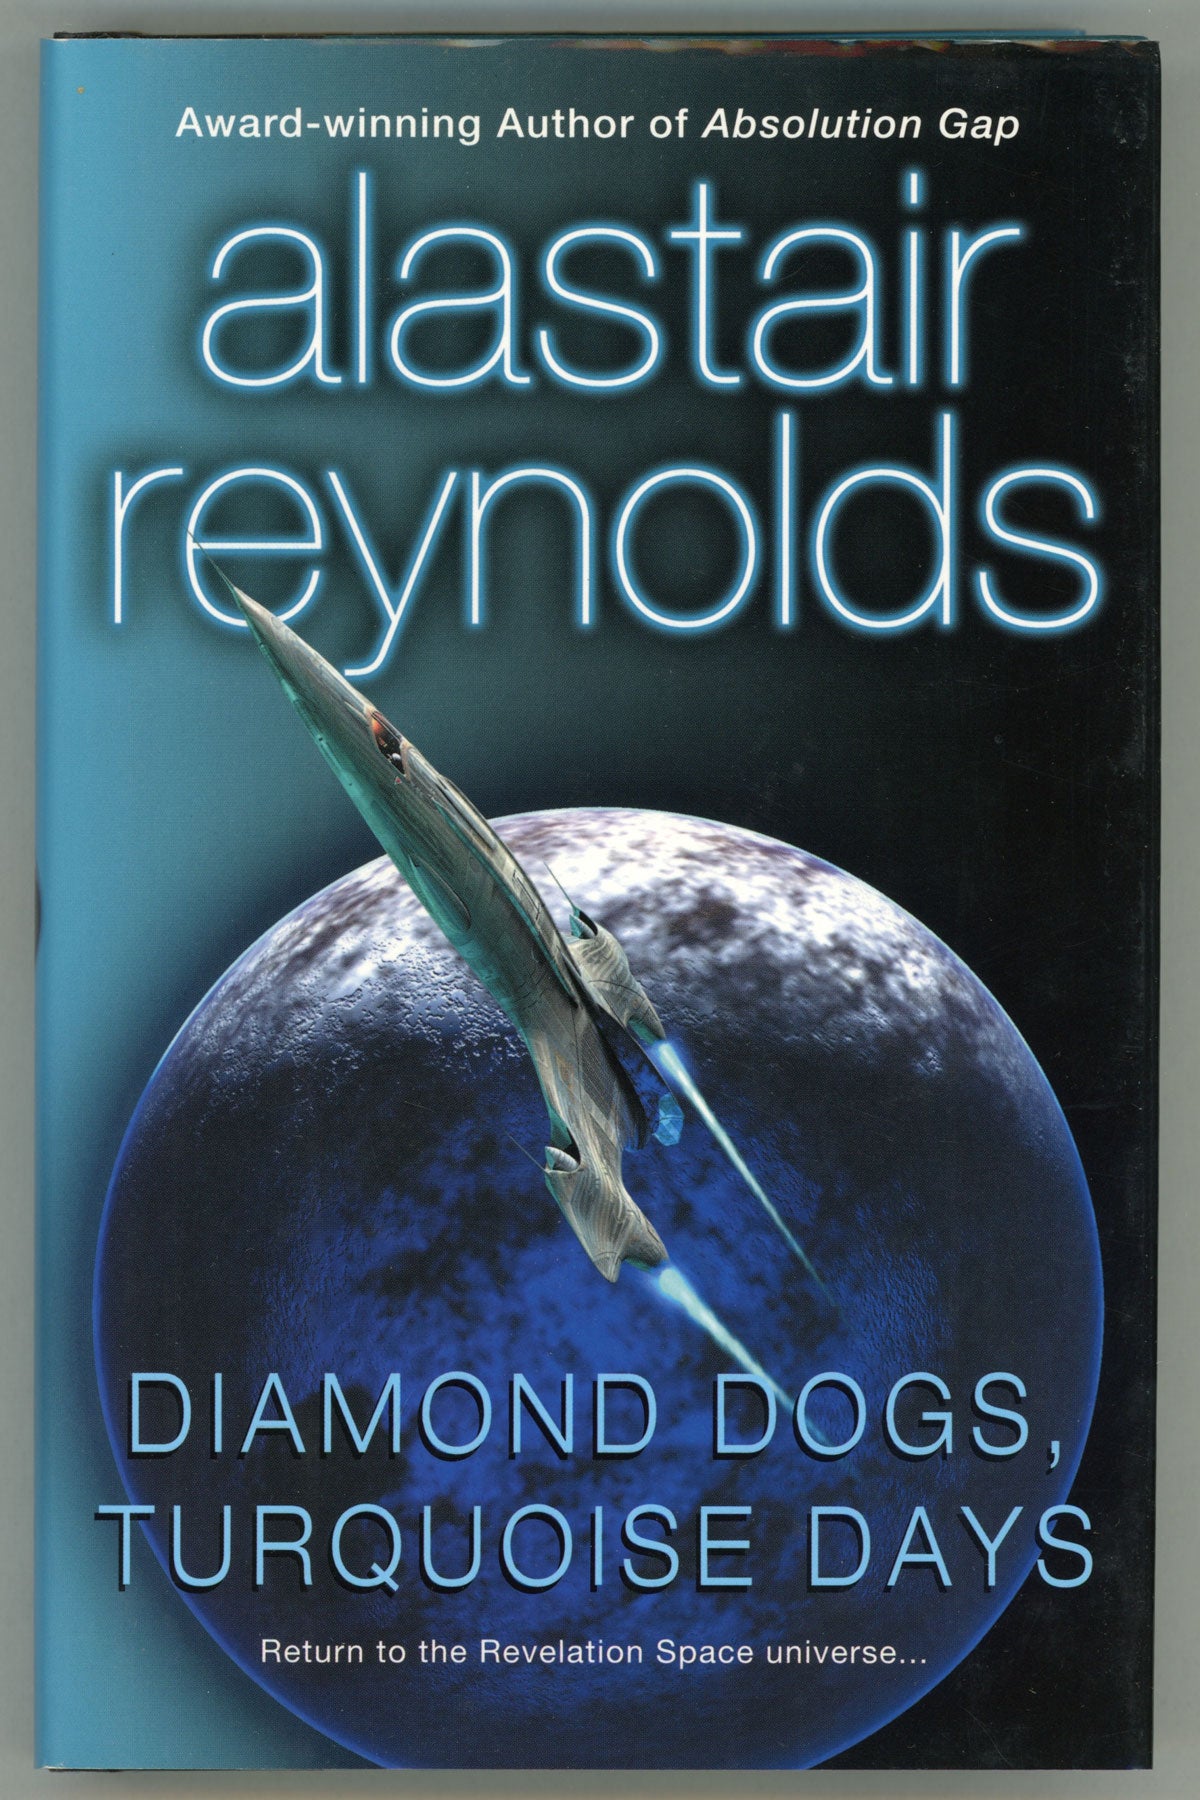 Revelation Space Alastair Reynolds 2002 Ace Science Fiction